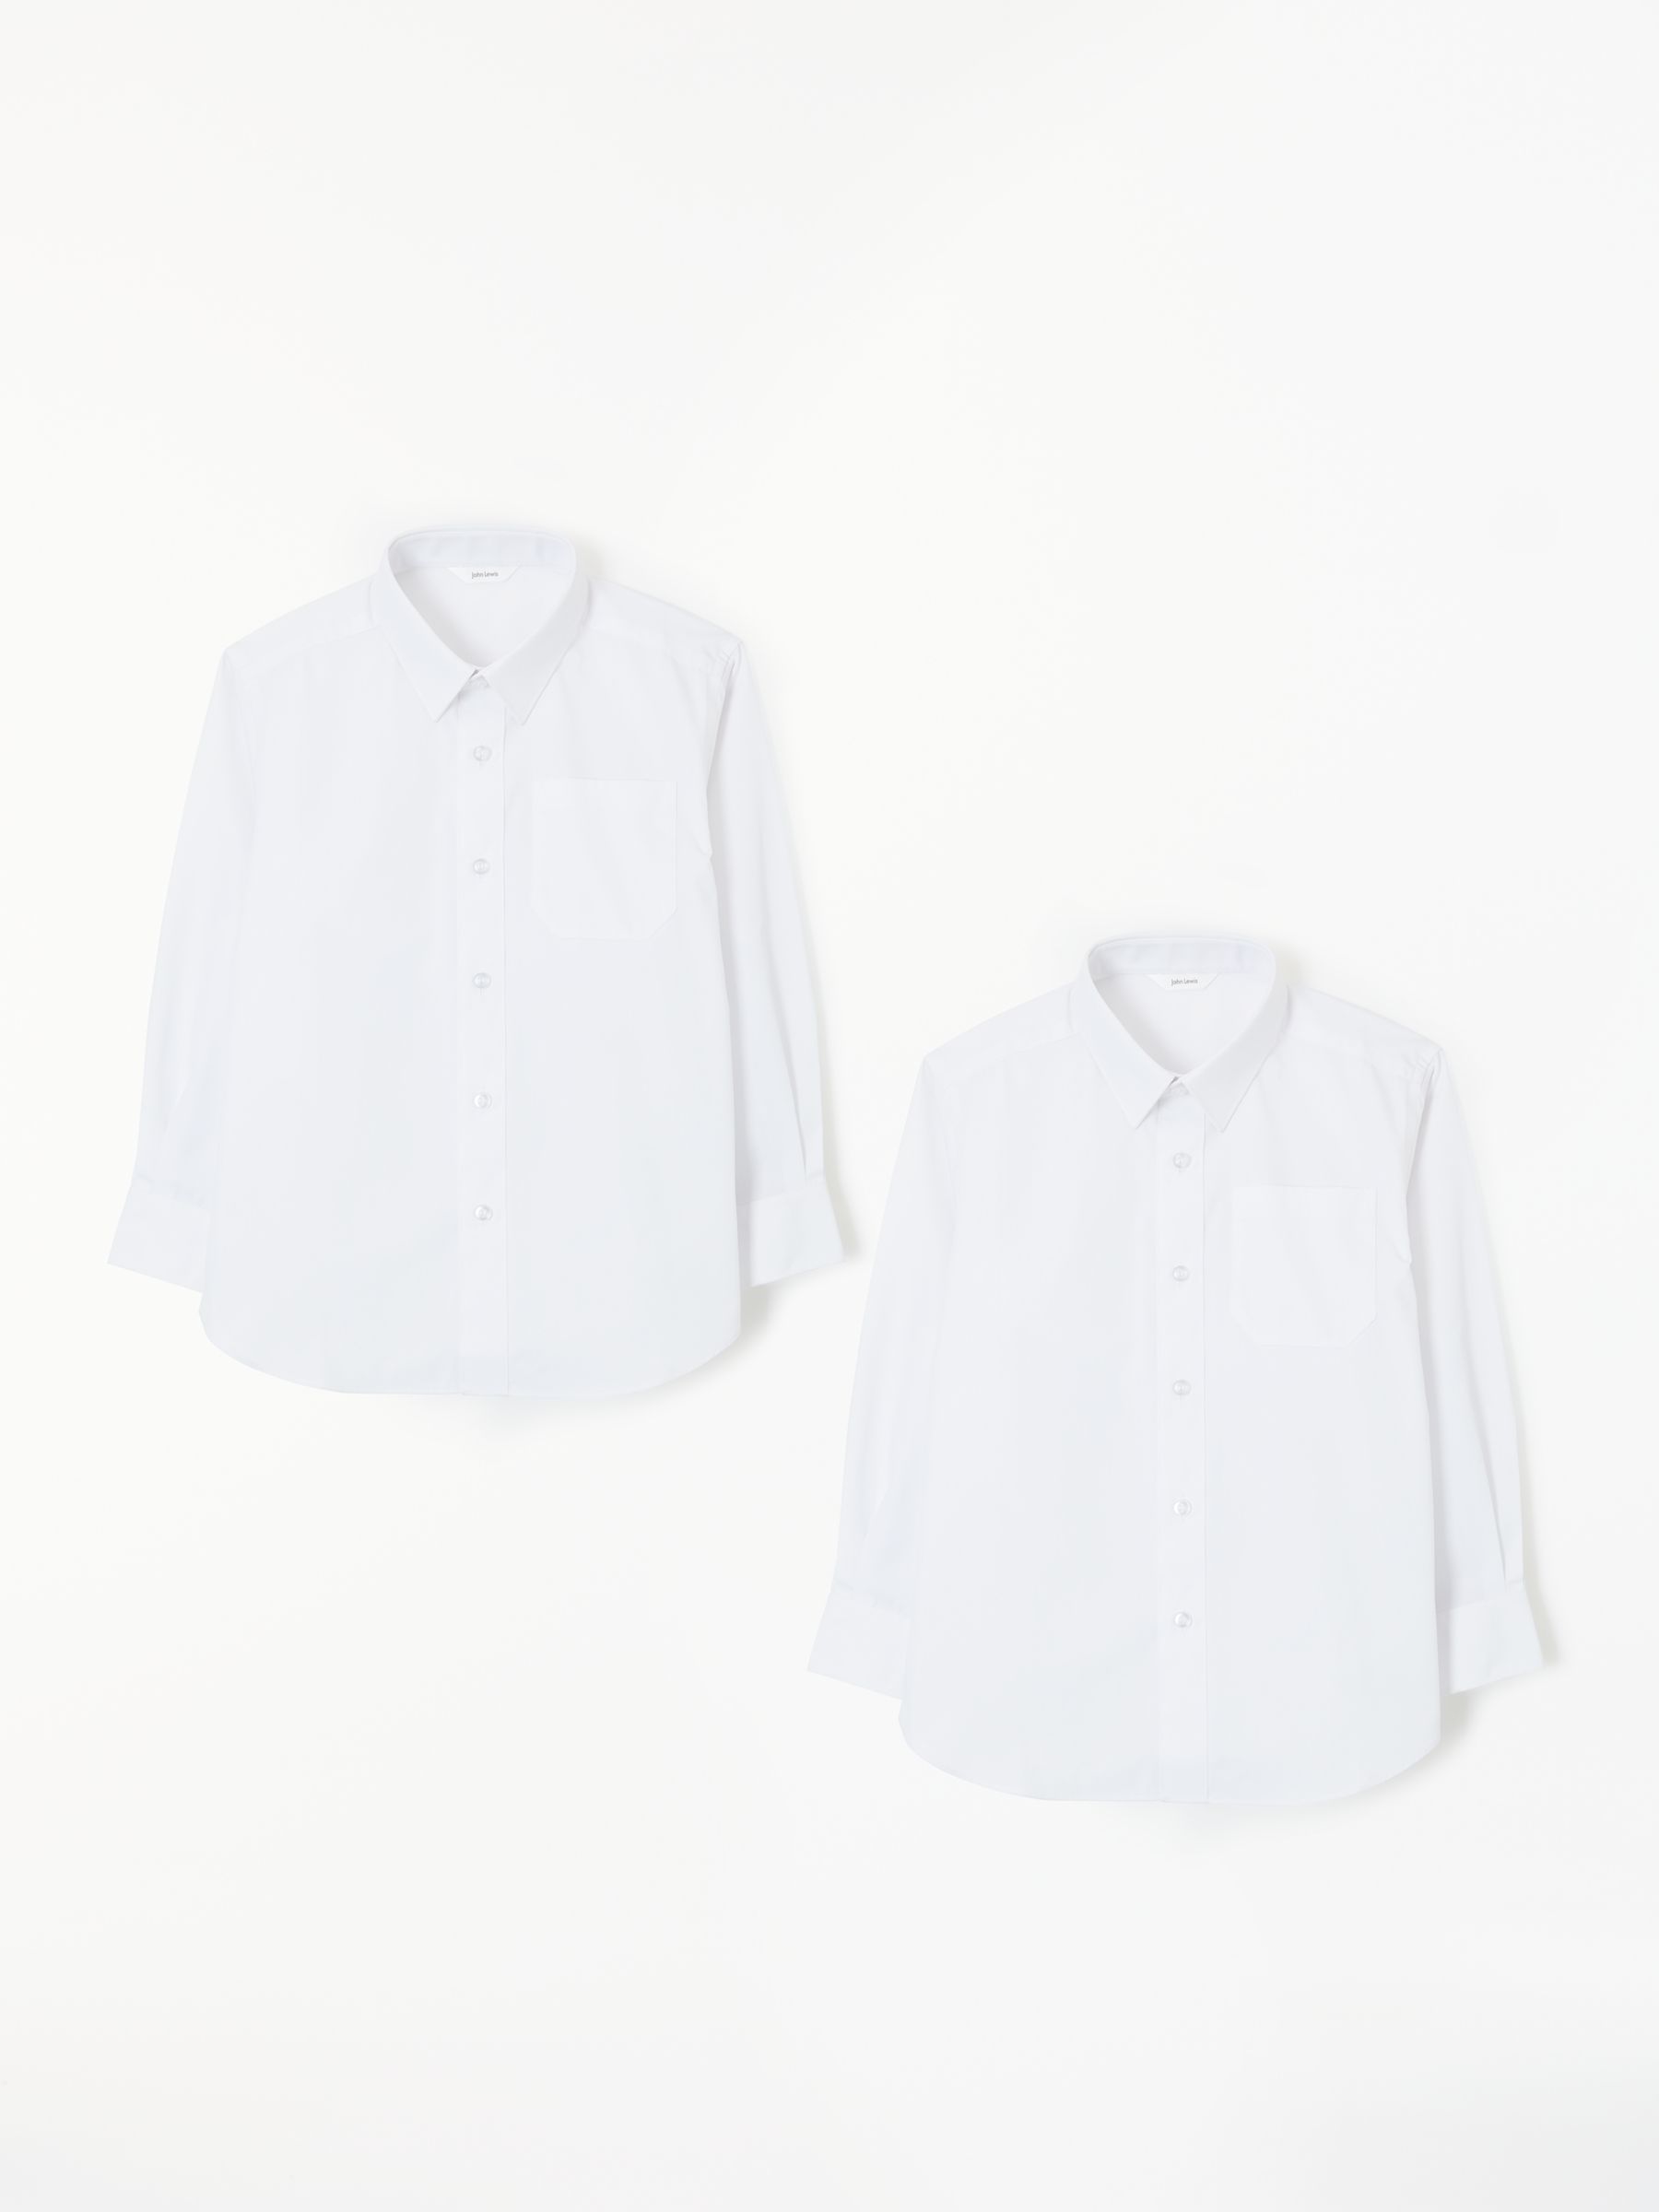 John Lewis & Partners Easy Care Long Sleeve School Shirt, Pack of 2